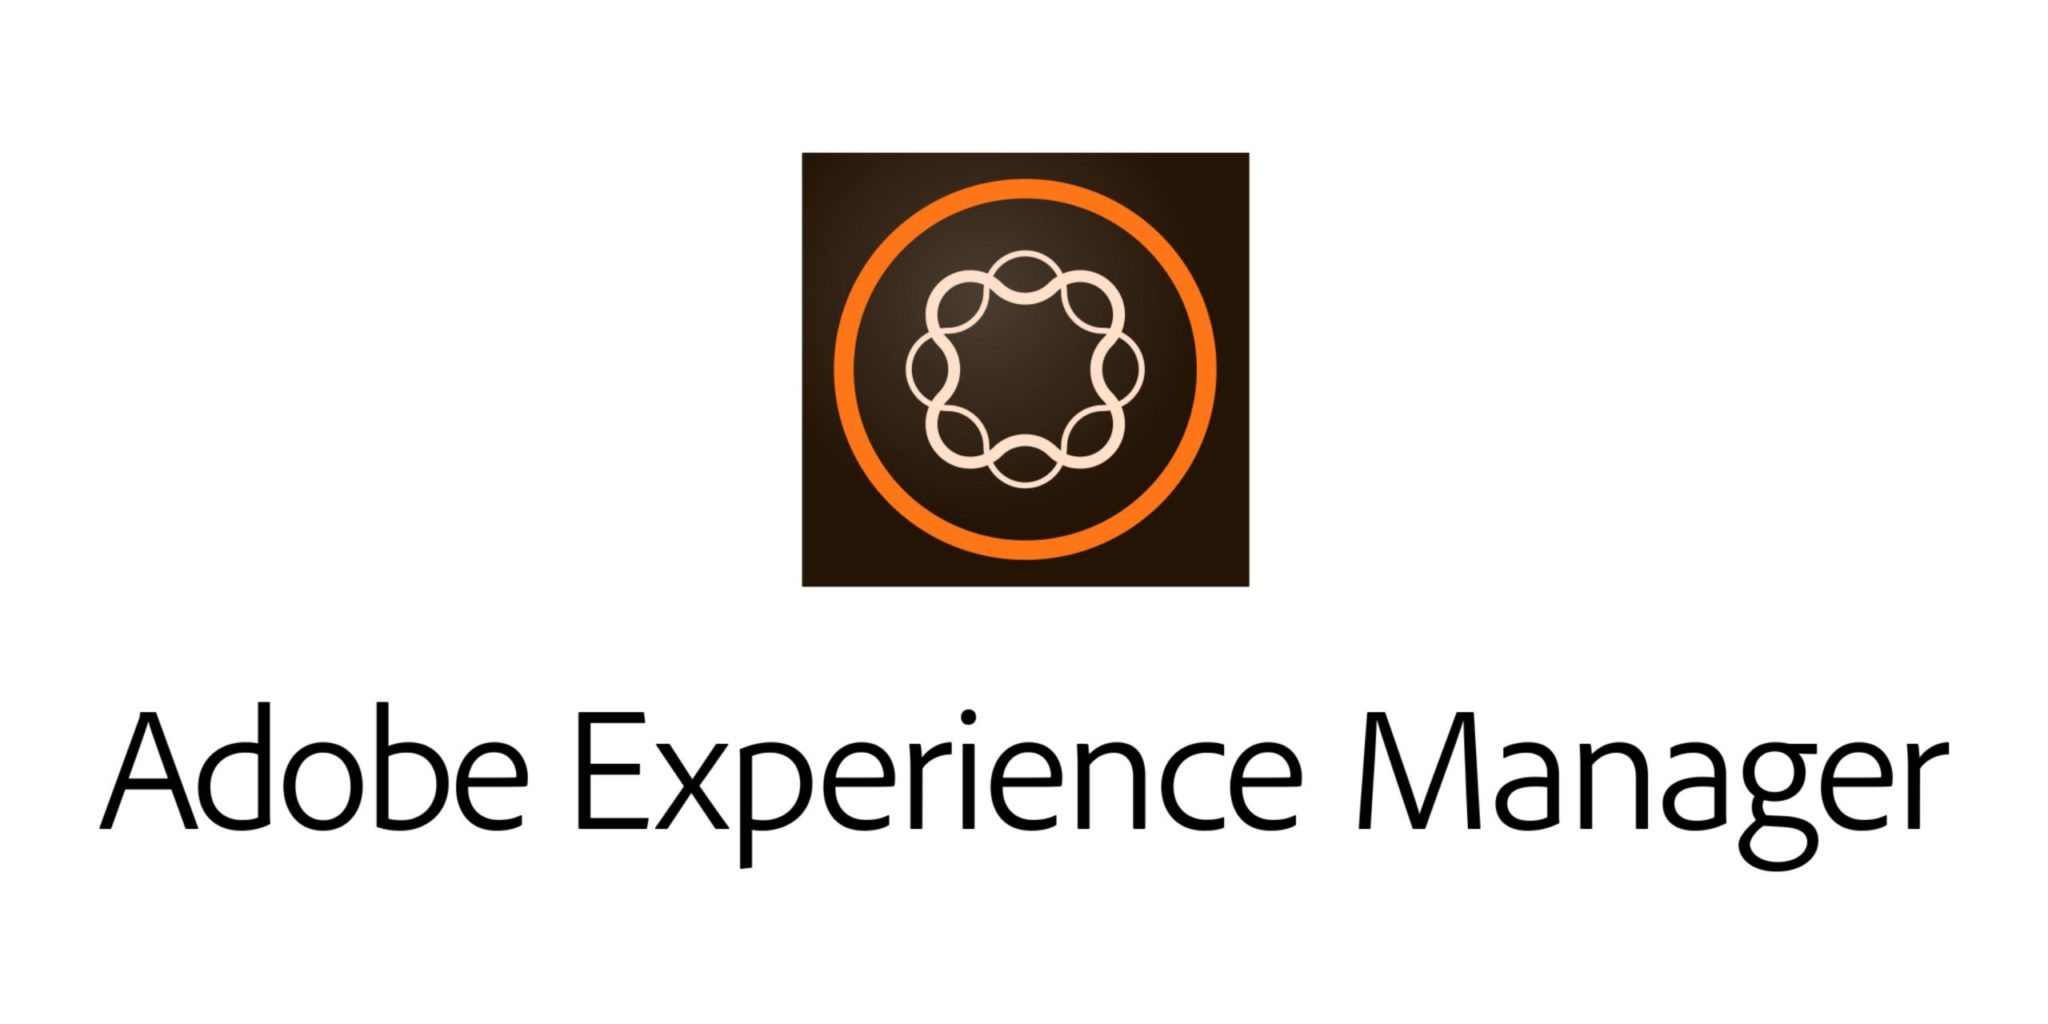 Optimiser le couple AEM (Adobe Experience Manager) et Adobe Commerce Cloud (Magento)